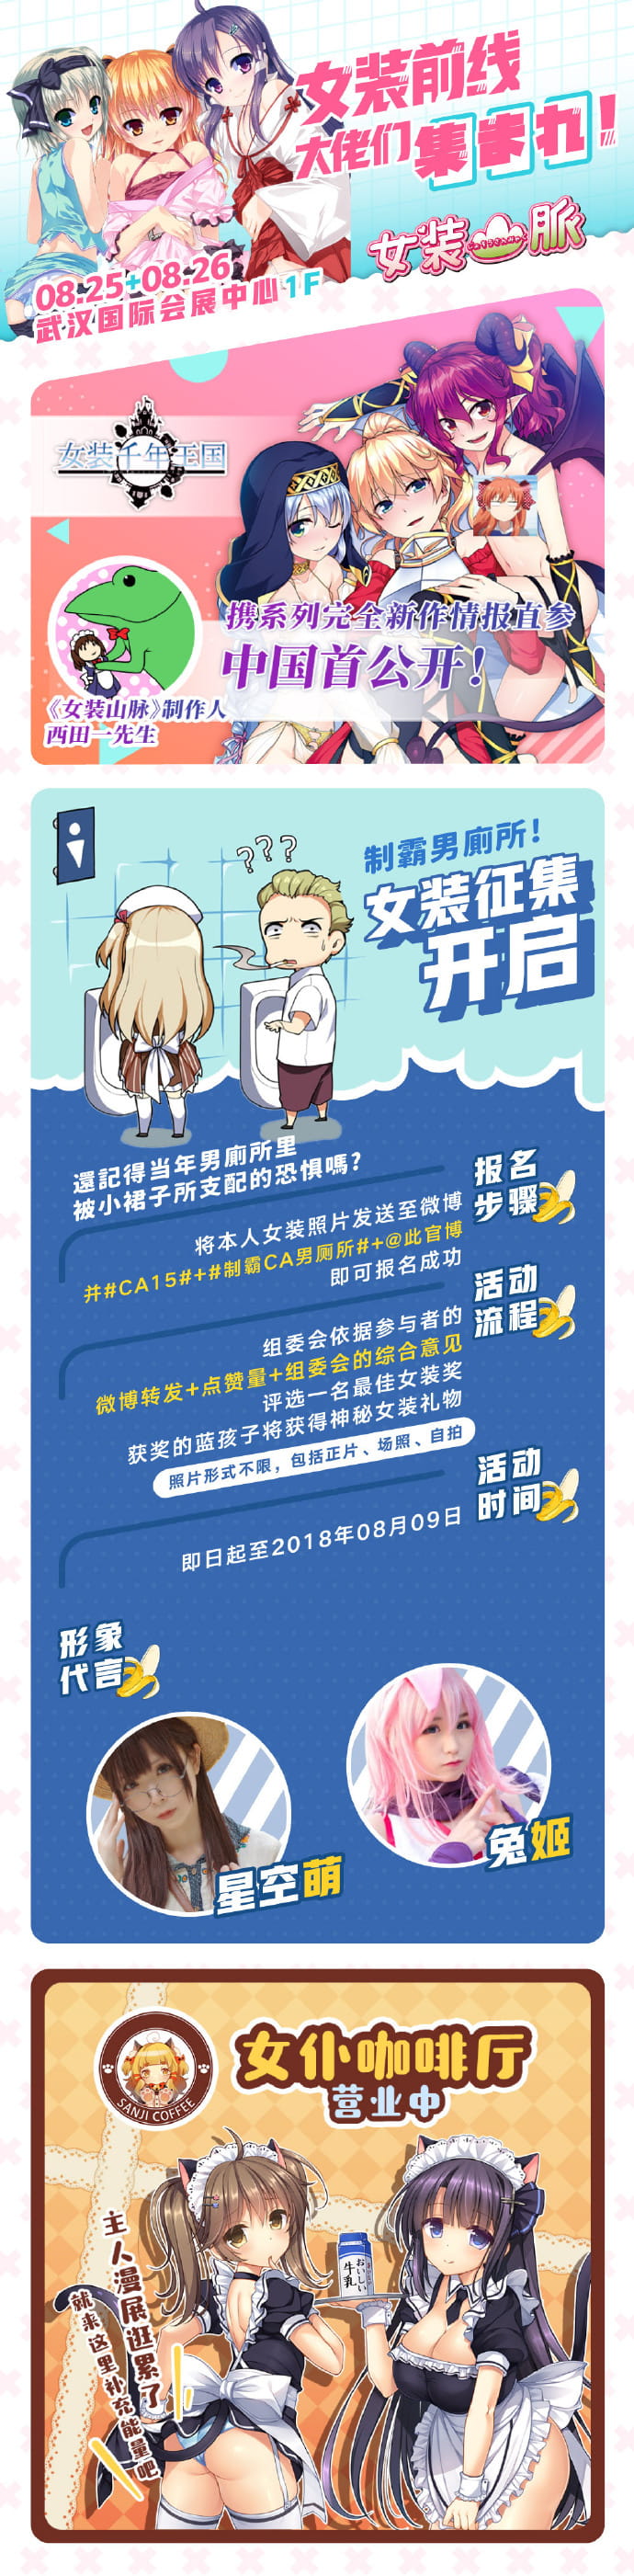 CA15,武汉ComiAi动漫游戏同人博览会,武汉漫展